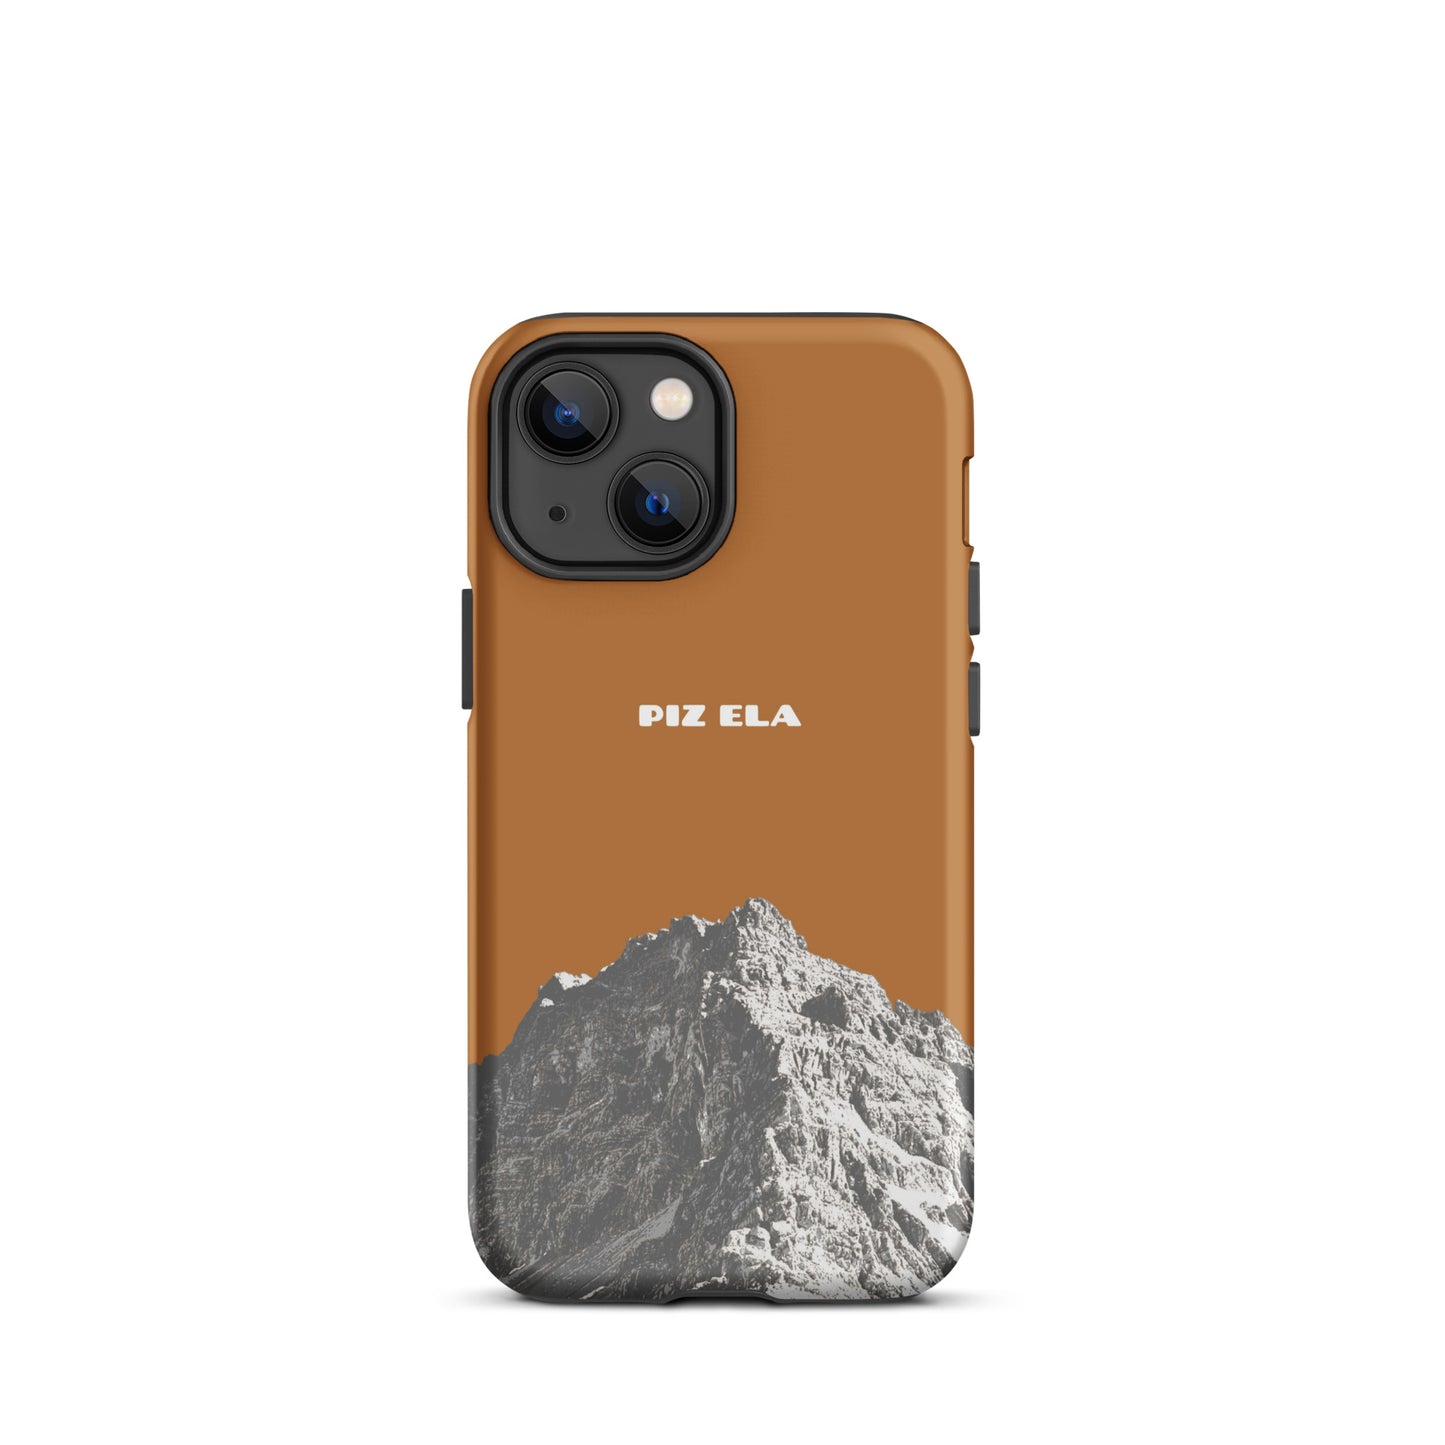 iPhone Case - Piz Ela - Kupfer